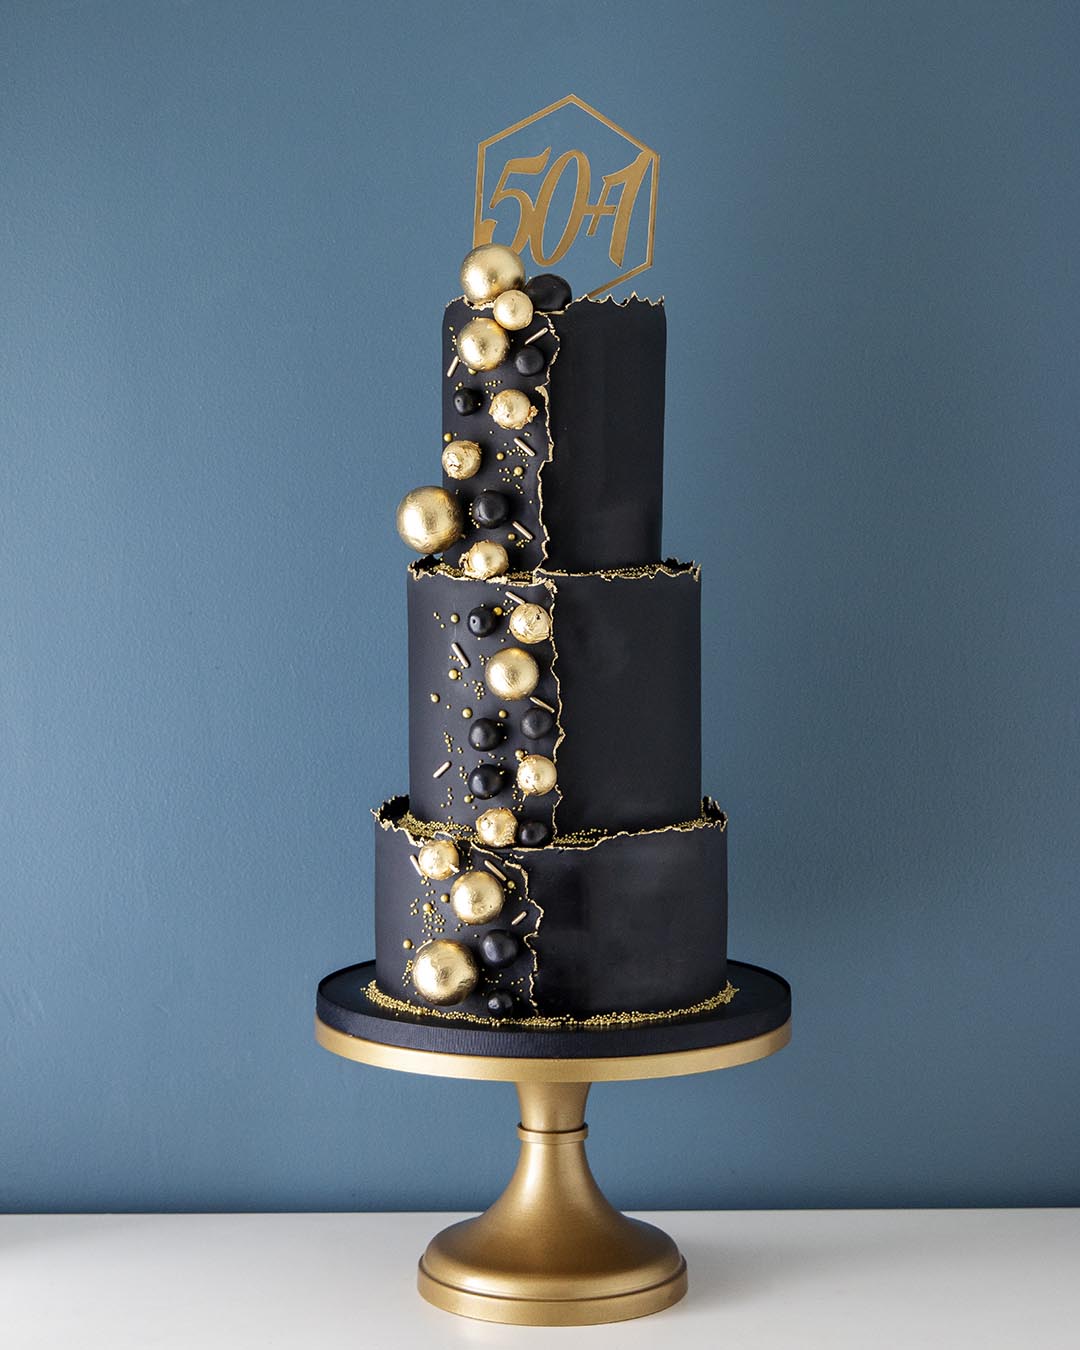 25 Beautiful 50th Birthday Cake Ideas for Men & Women